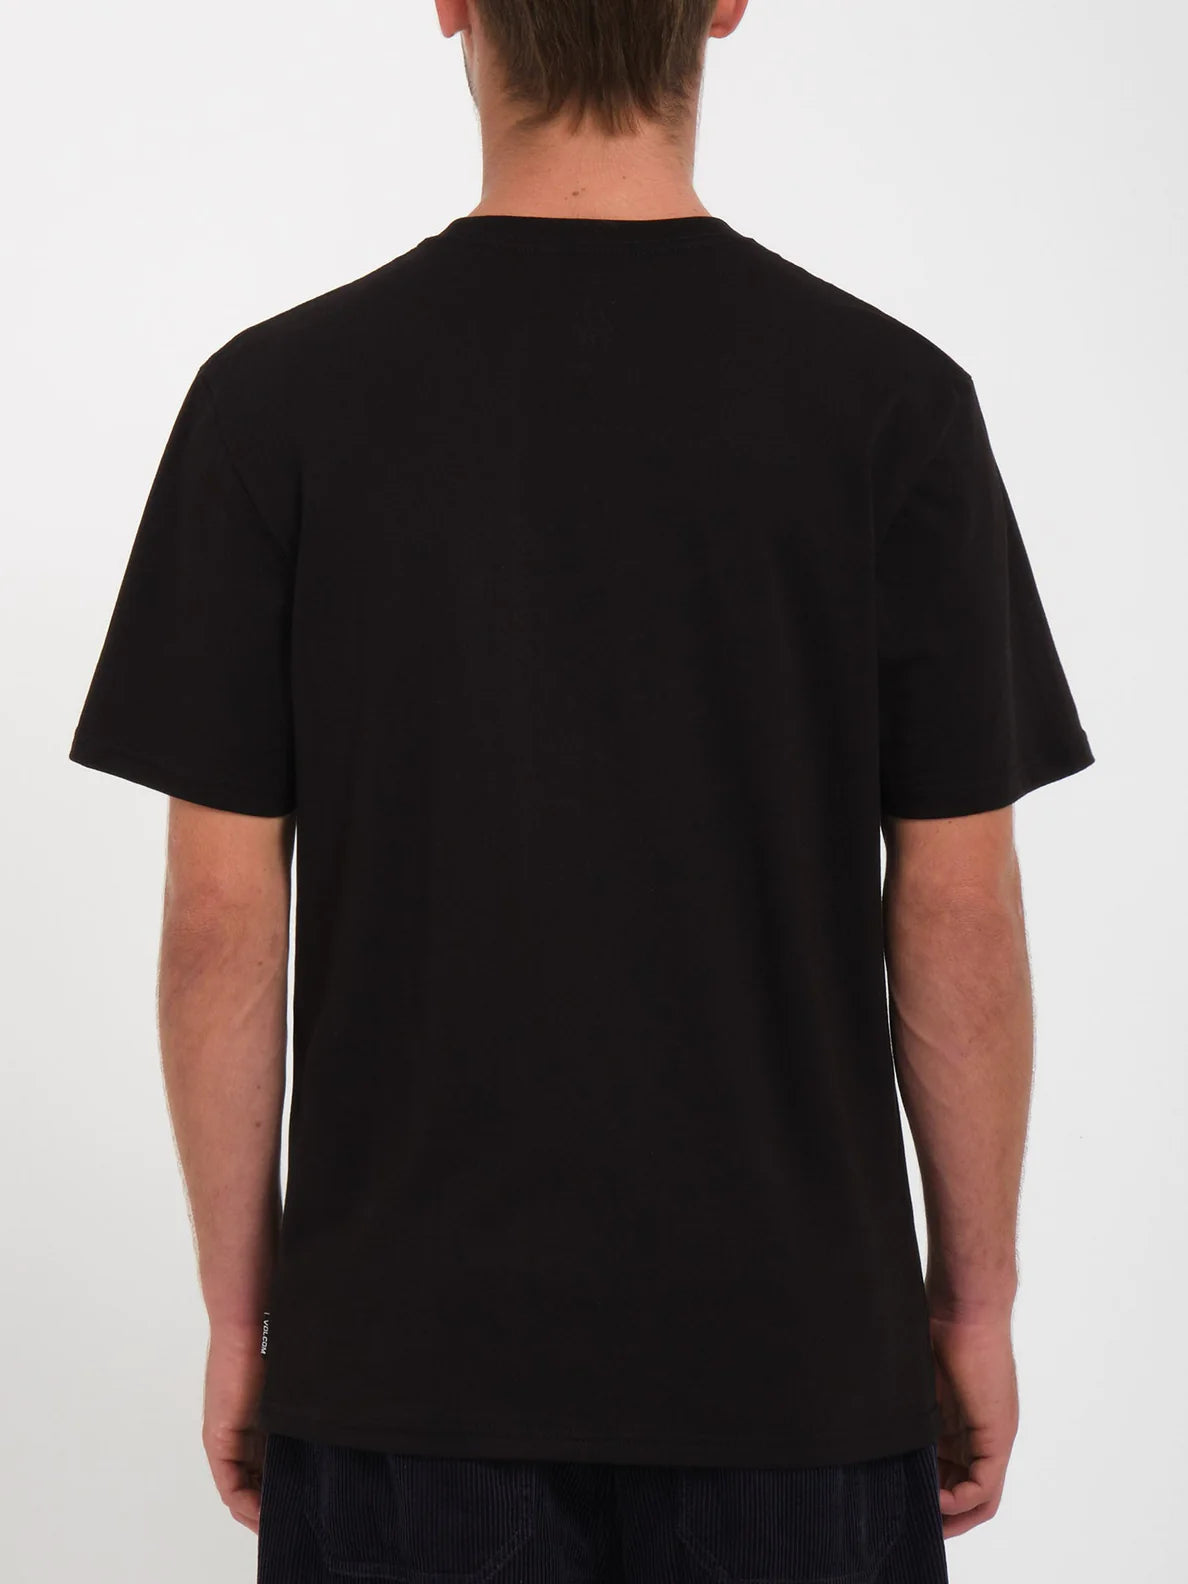 Camiseta Volcom Max Sherman 1 - Black